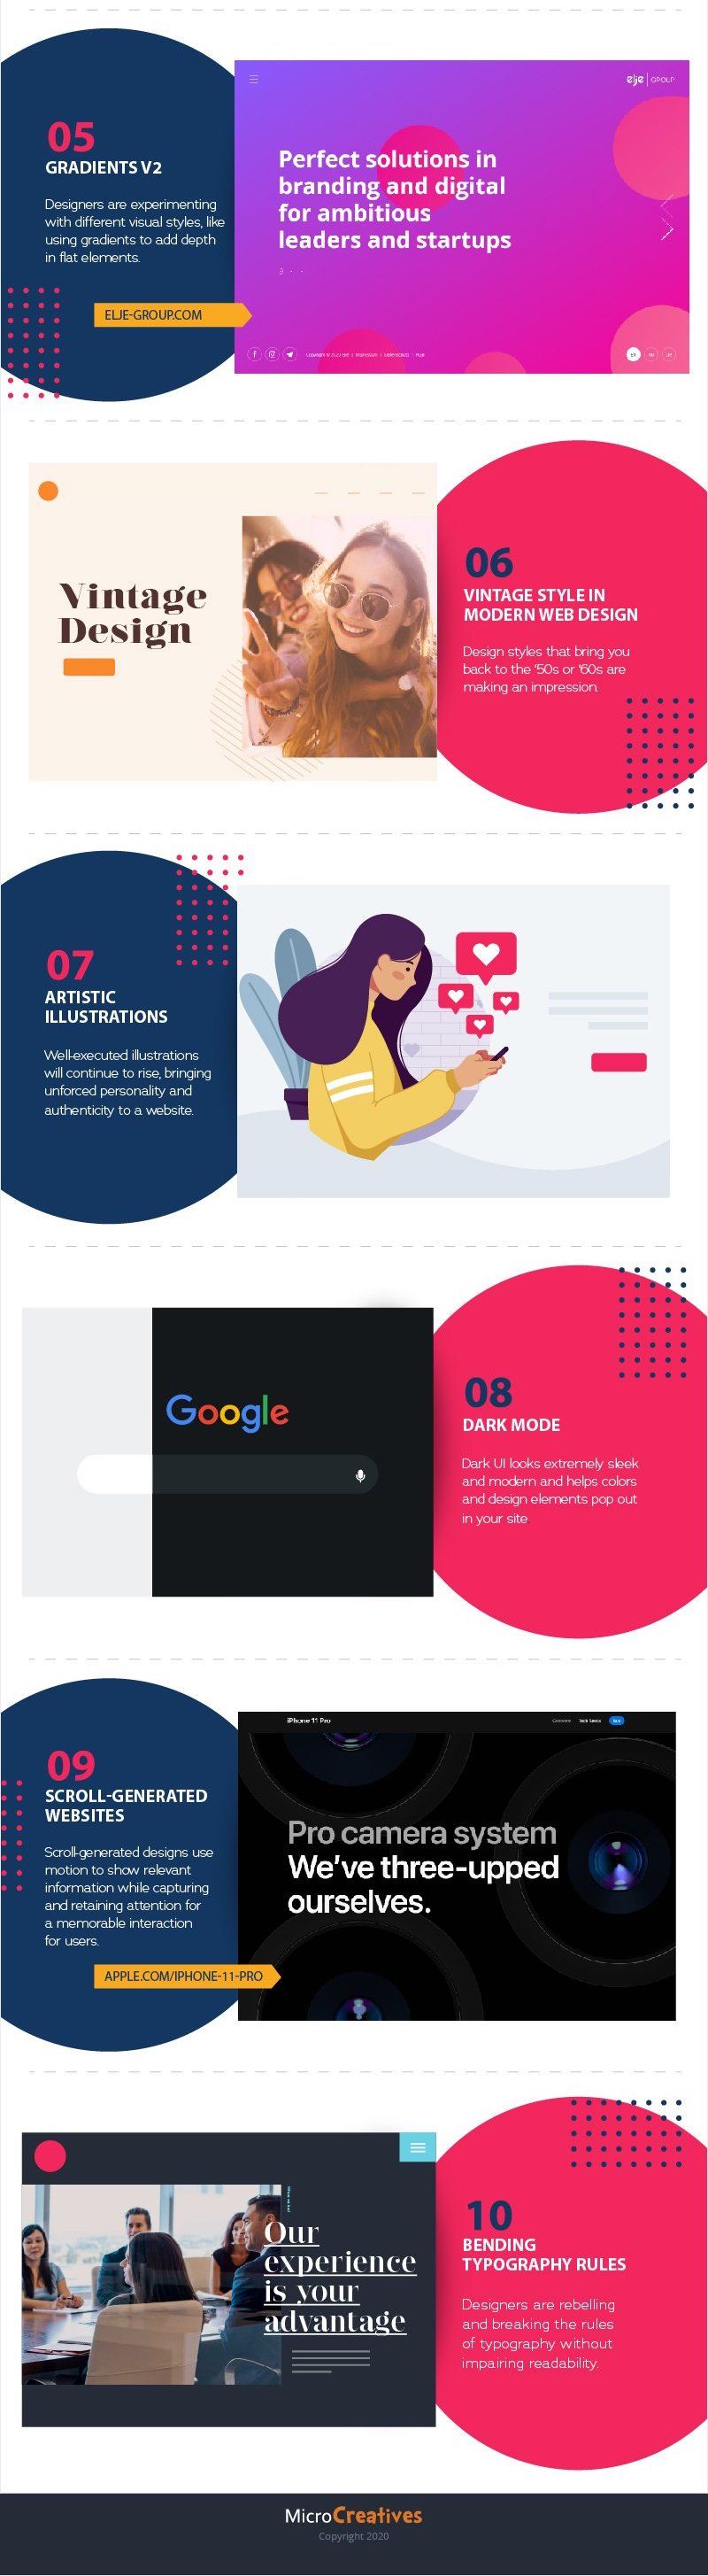 10 web design trends2 info 2